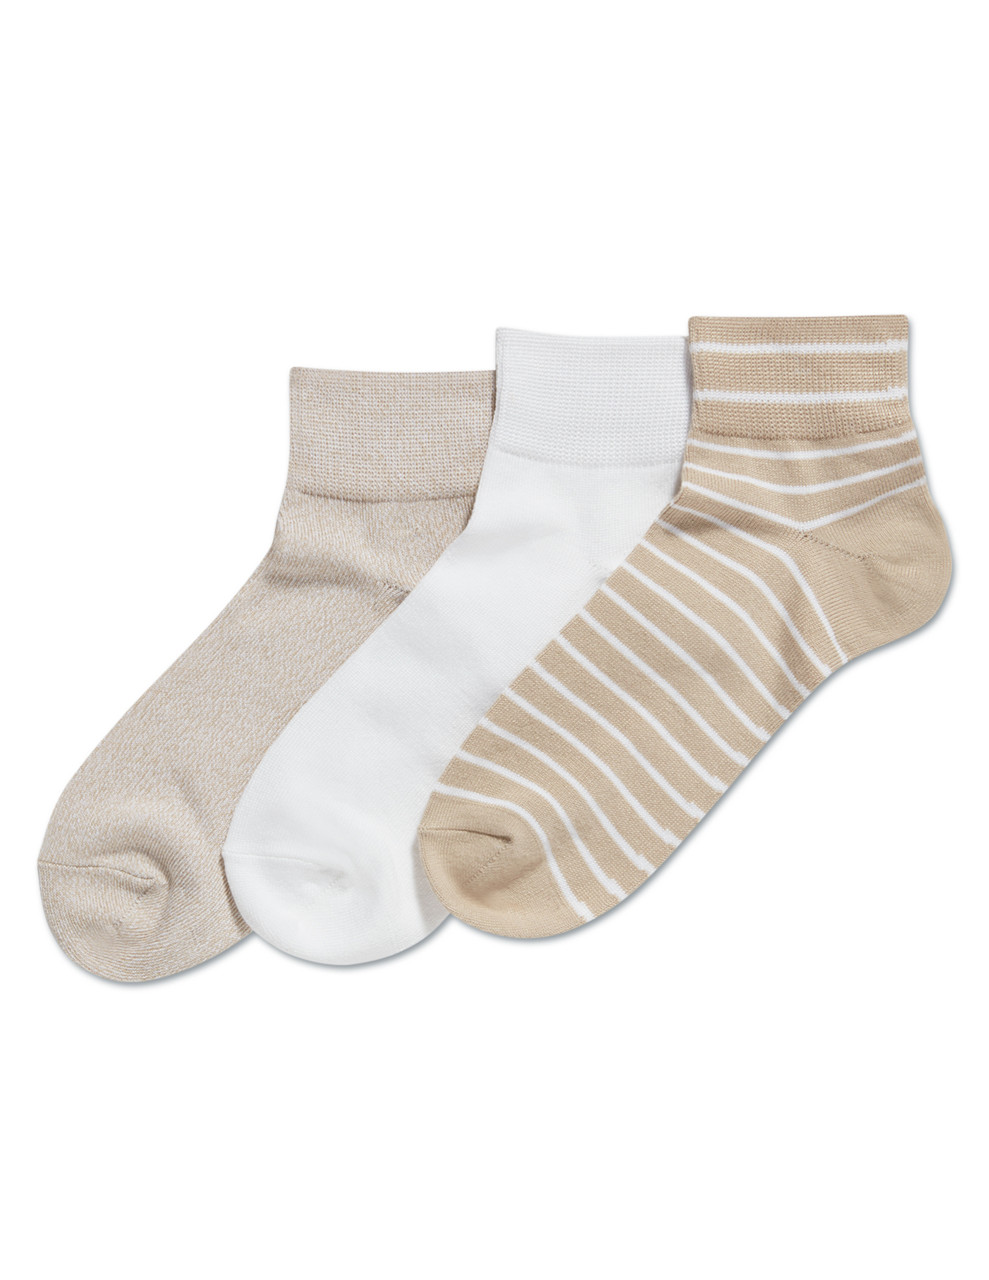 No nonsense Socks Soft & Breathable No Show Cushioned White Size 4